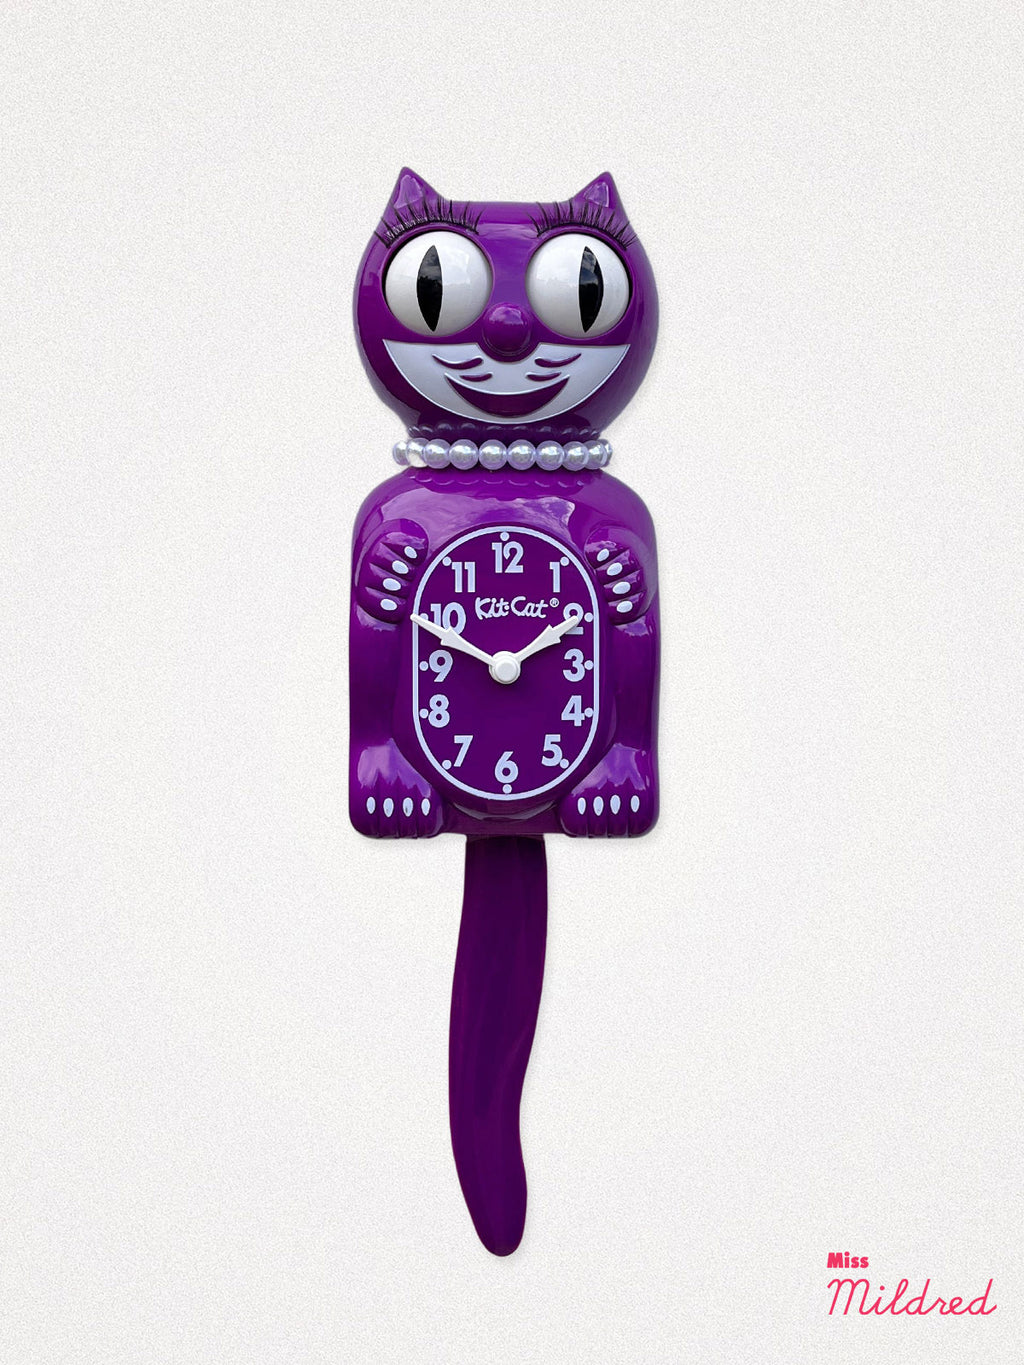 Kit Cat Clock - Original Large Size - Boysenberry Purple Necklace